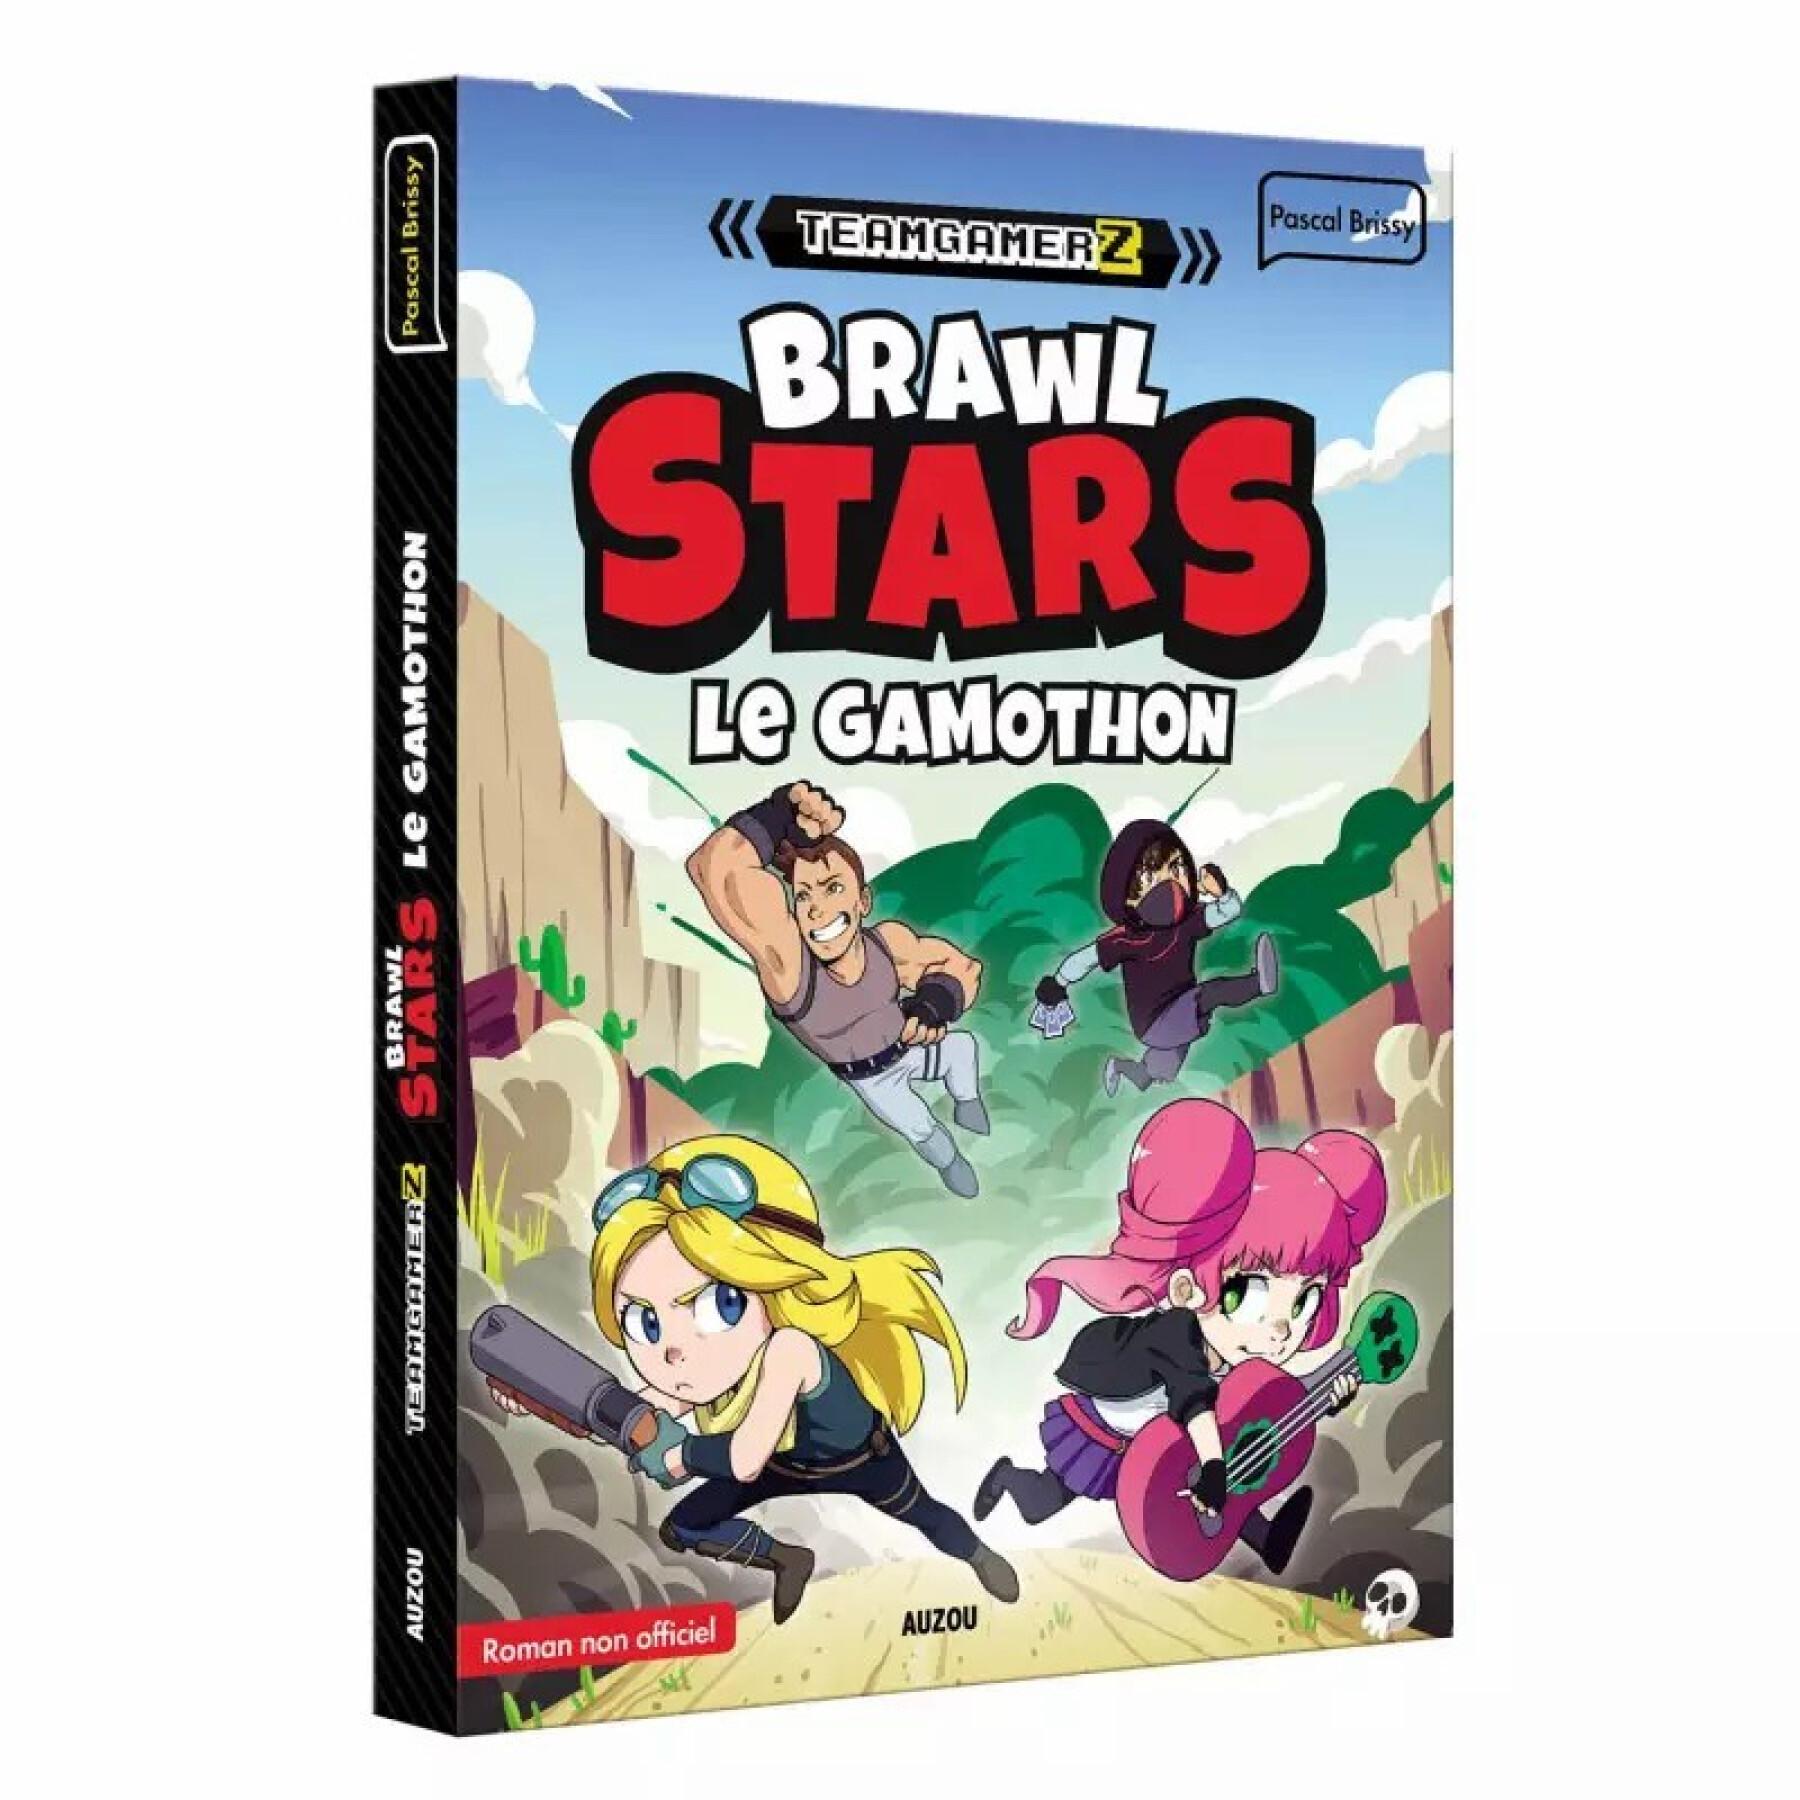 Book for team gamerz tome 3 brawl stars le gamothon Auzou